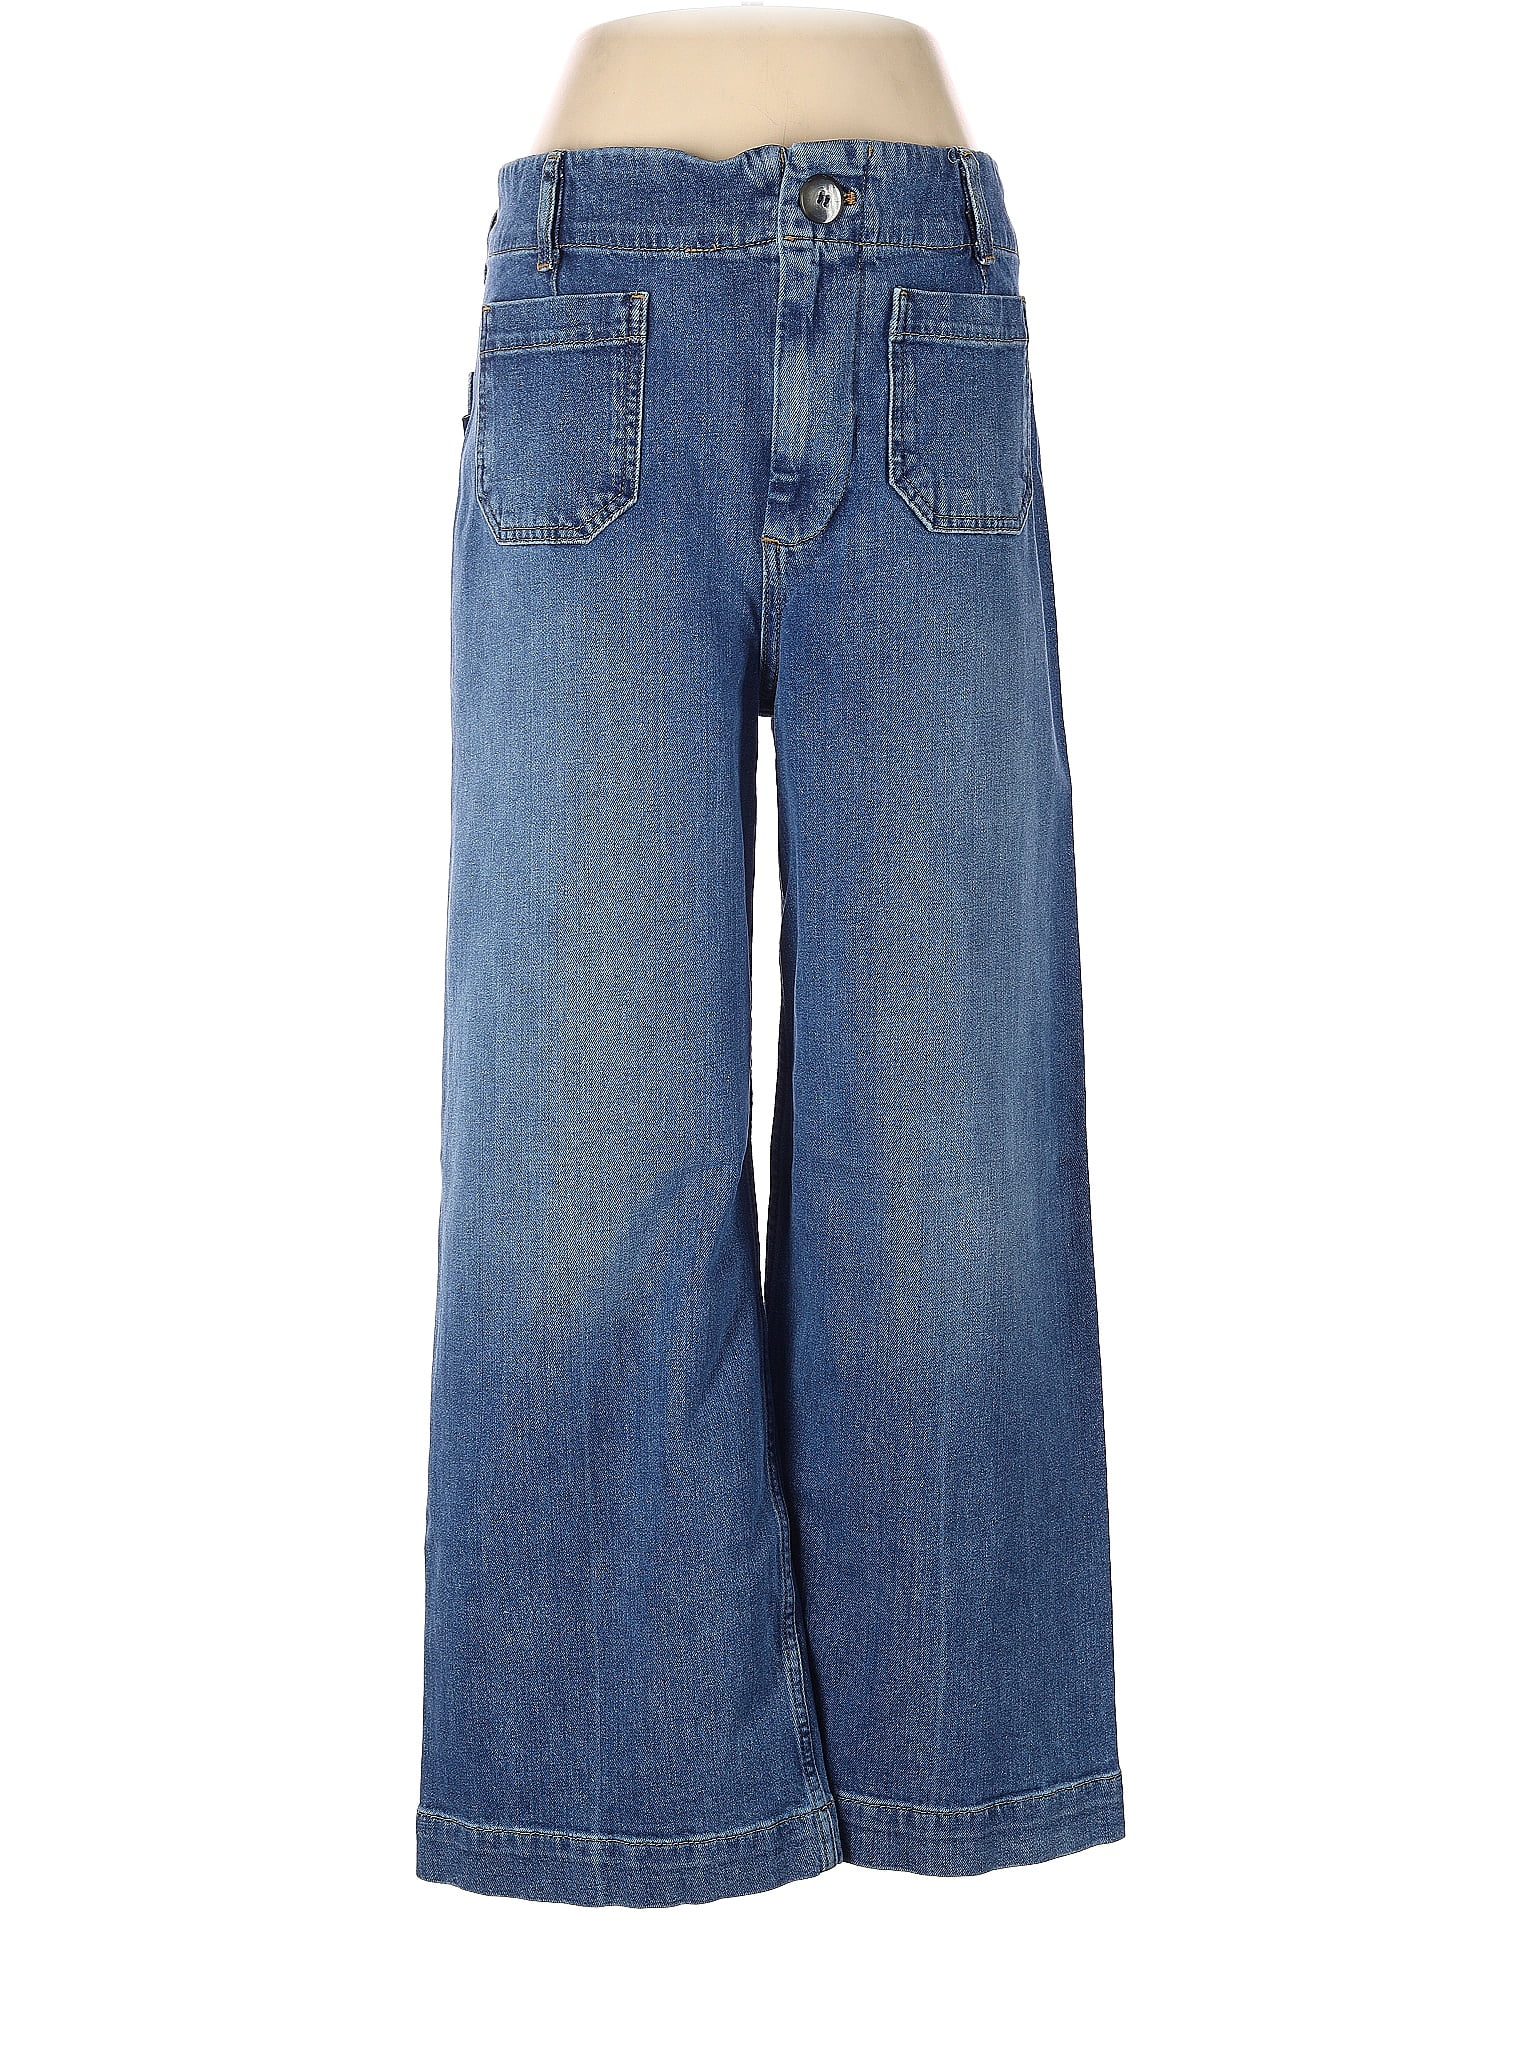 Pilcro Solid Blue Jeans 28 Waist - 68% off | thredUP